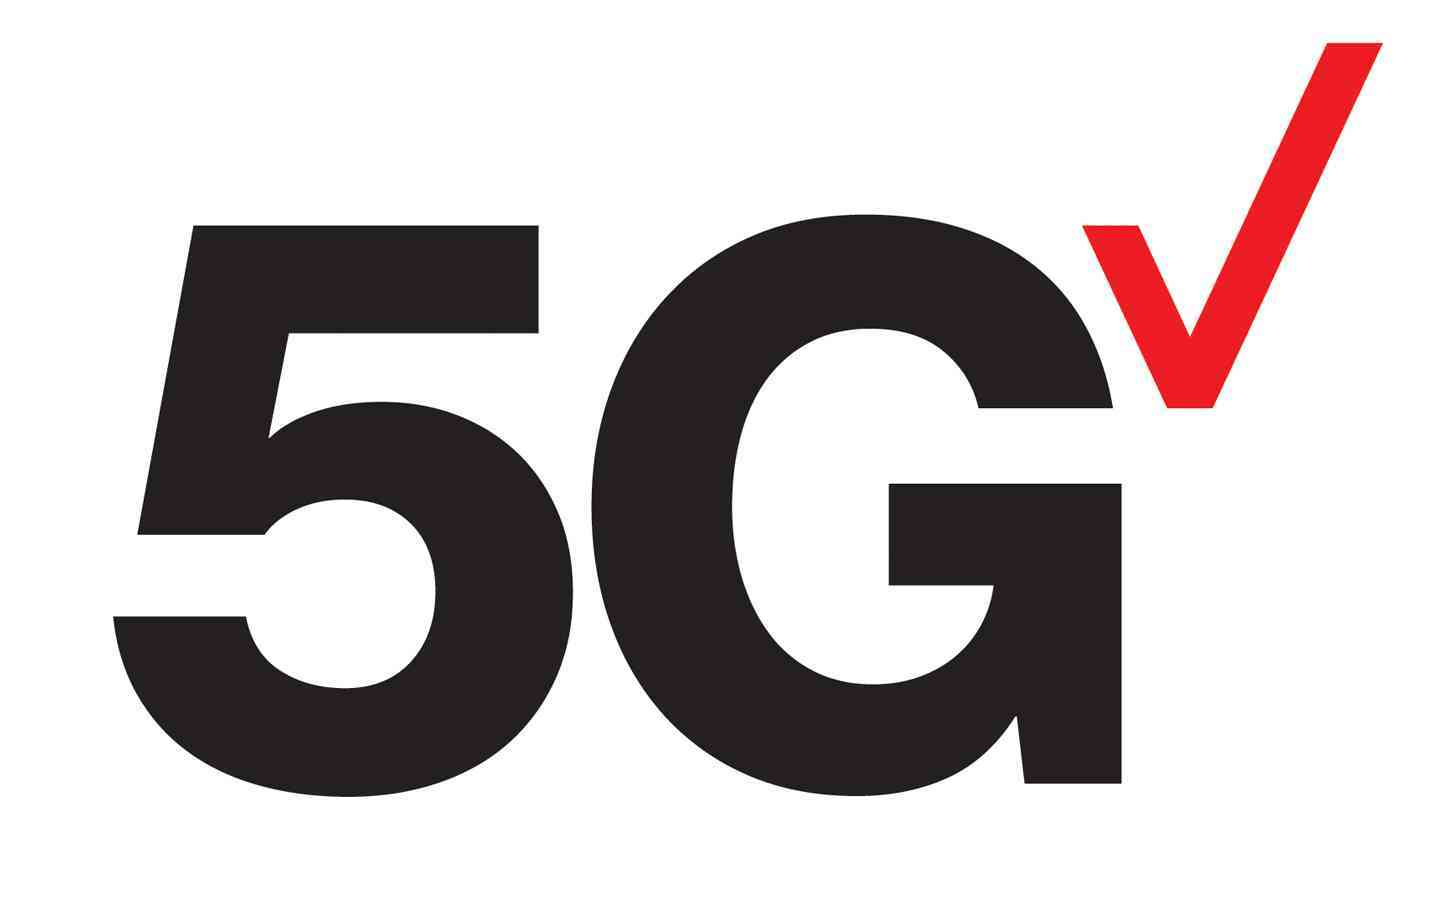 Verizon's 5G logo